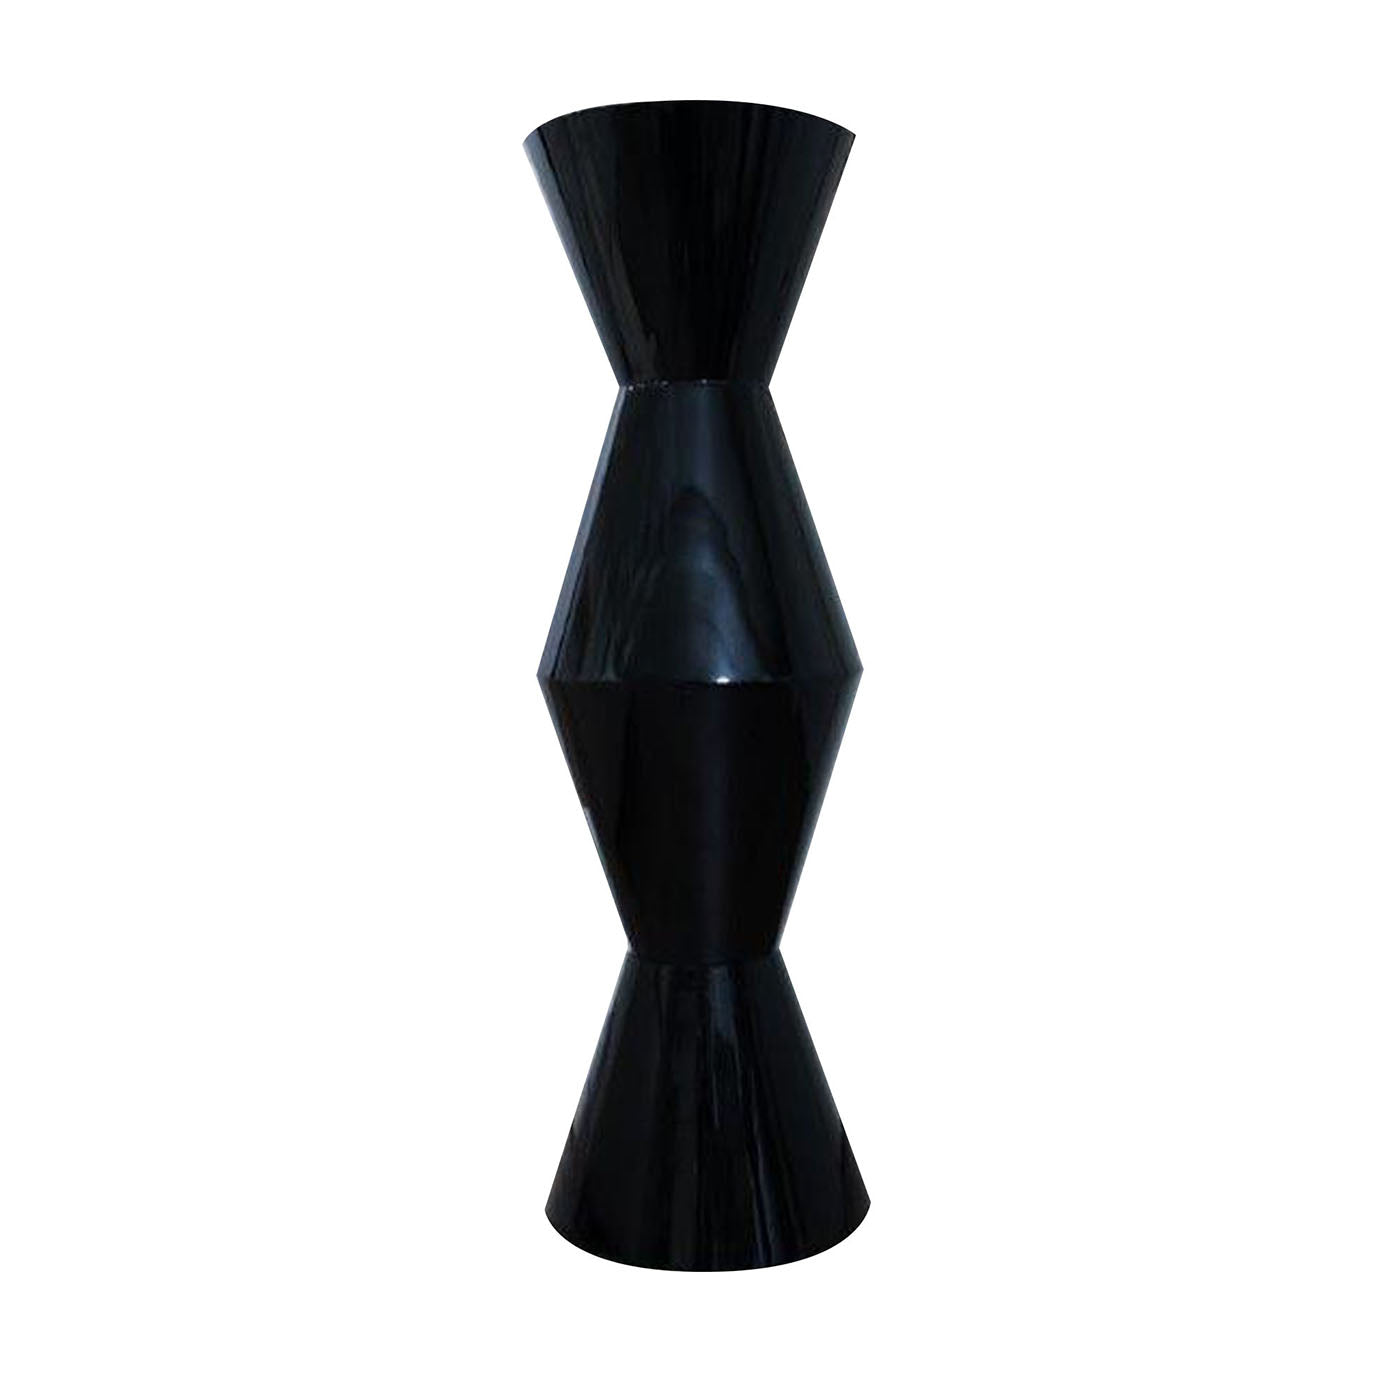 FoRMA Poliedro Black Vase by Simone Micheli - Main view